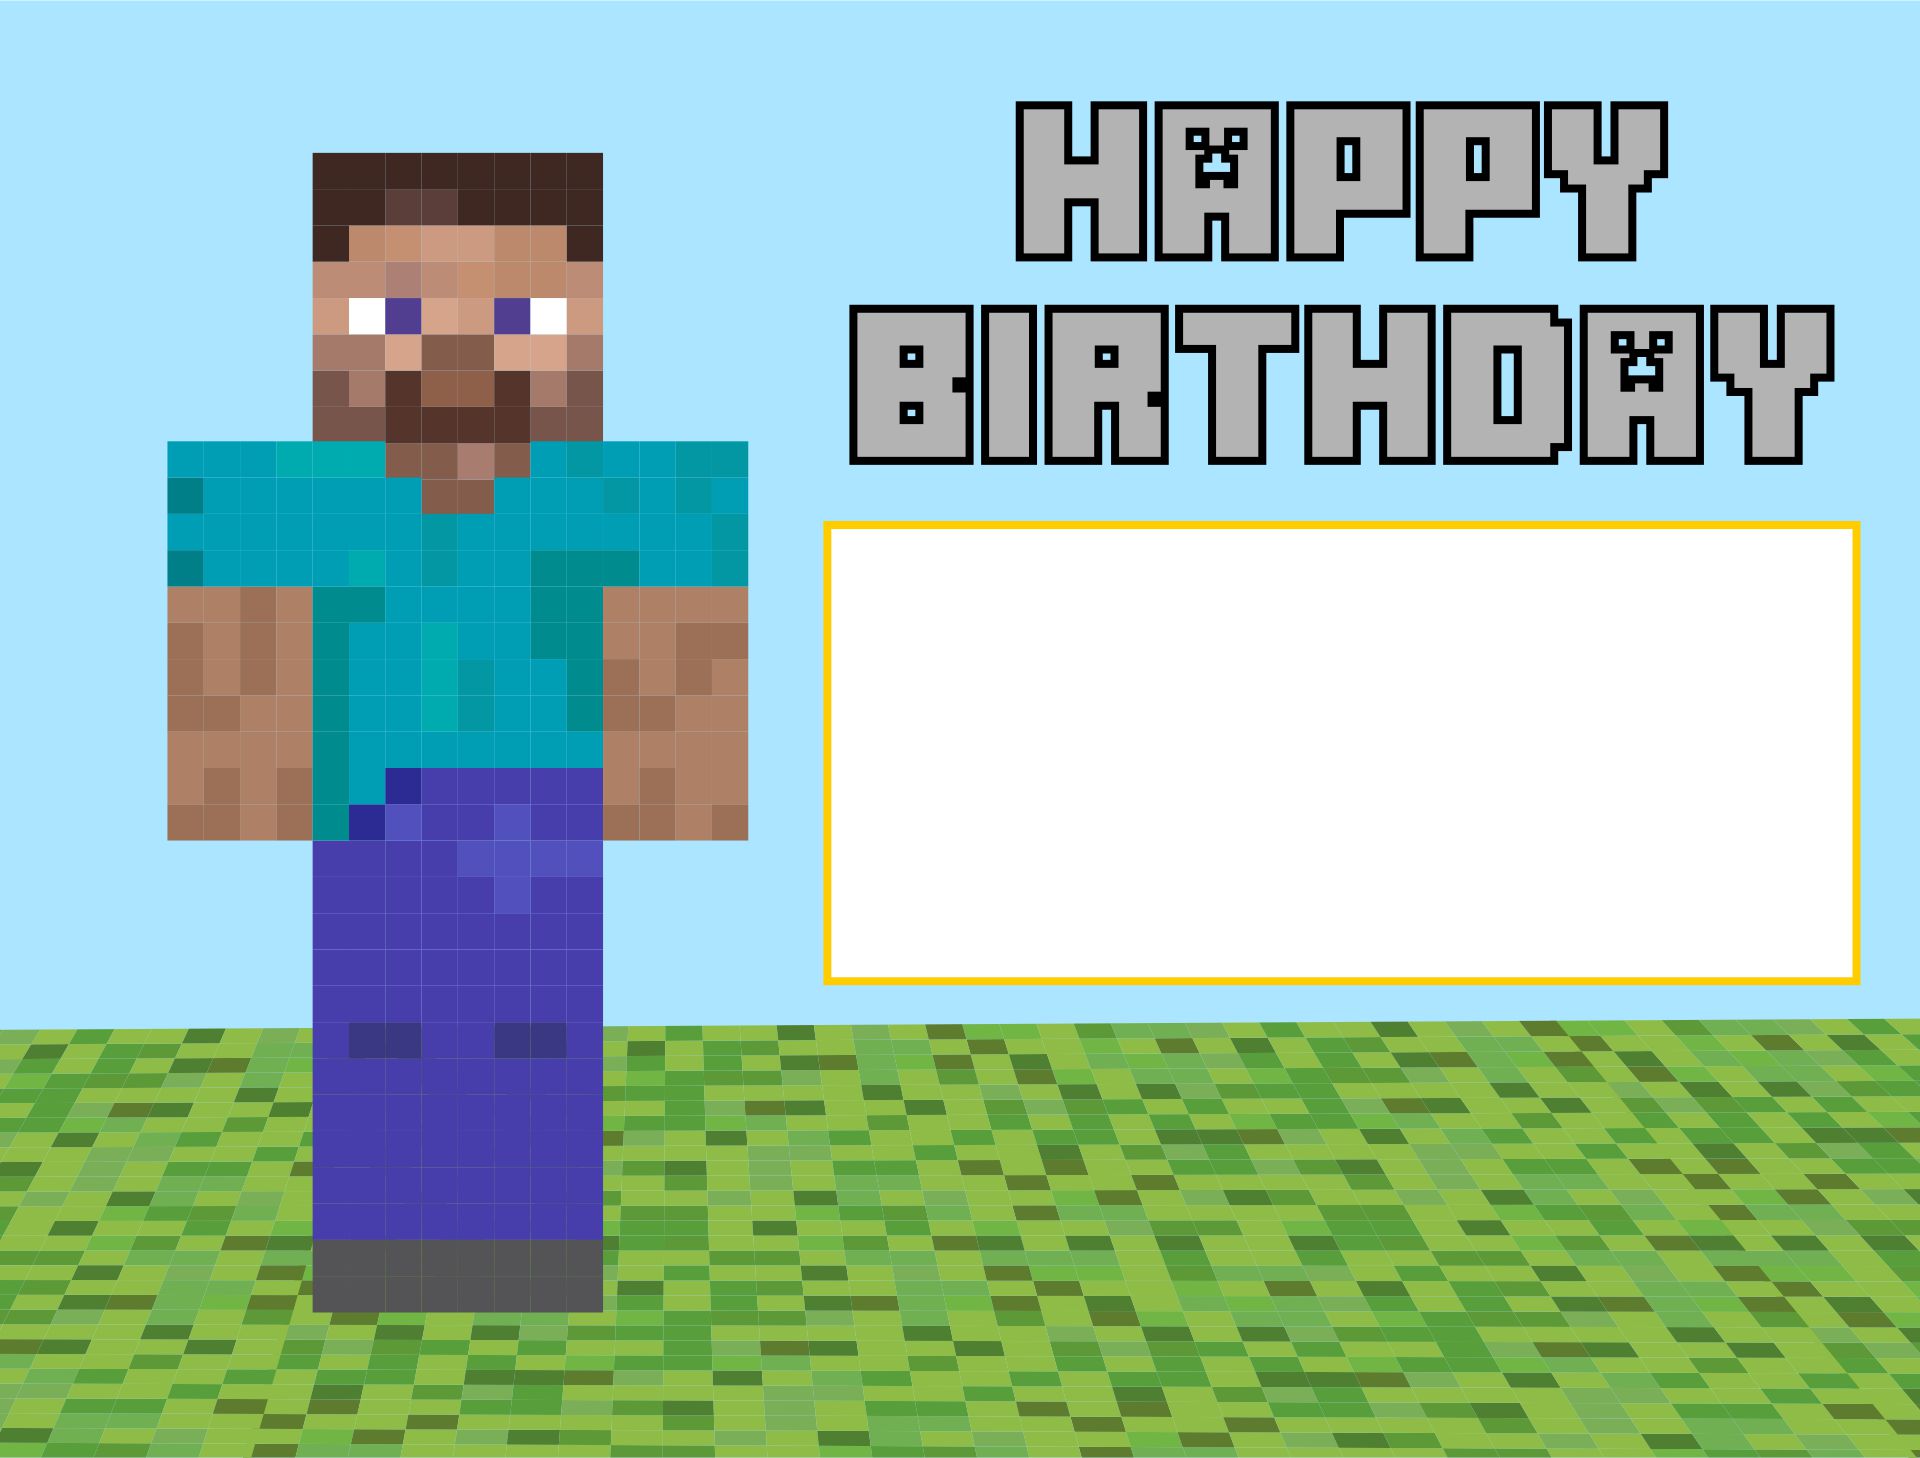 Free Printable Minecraft Happy Birthday Card Free Printable Templates